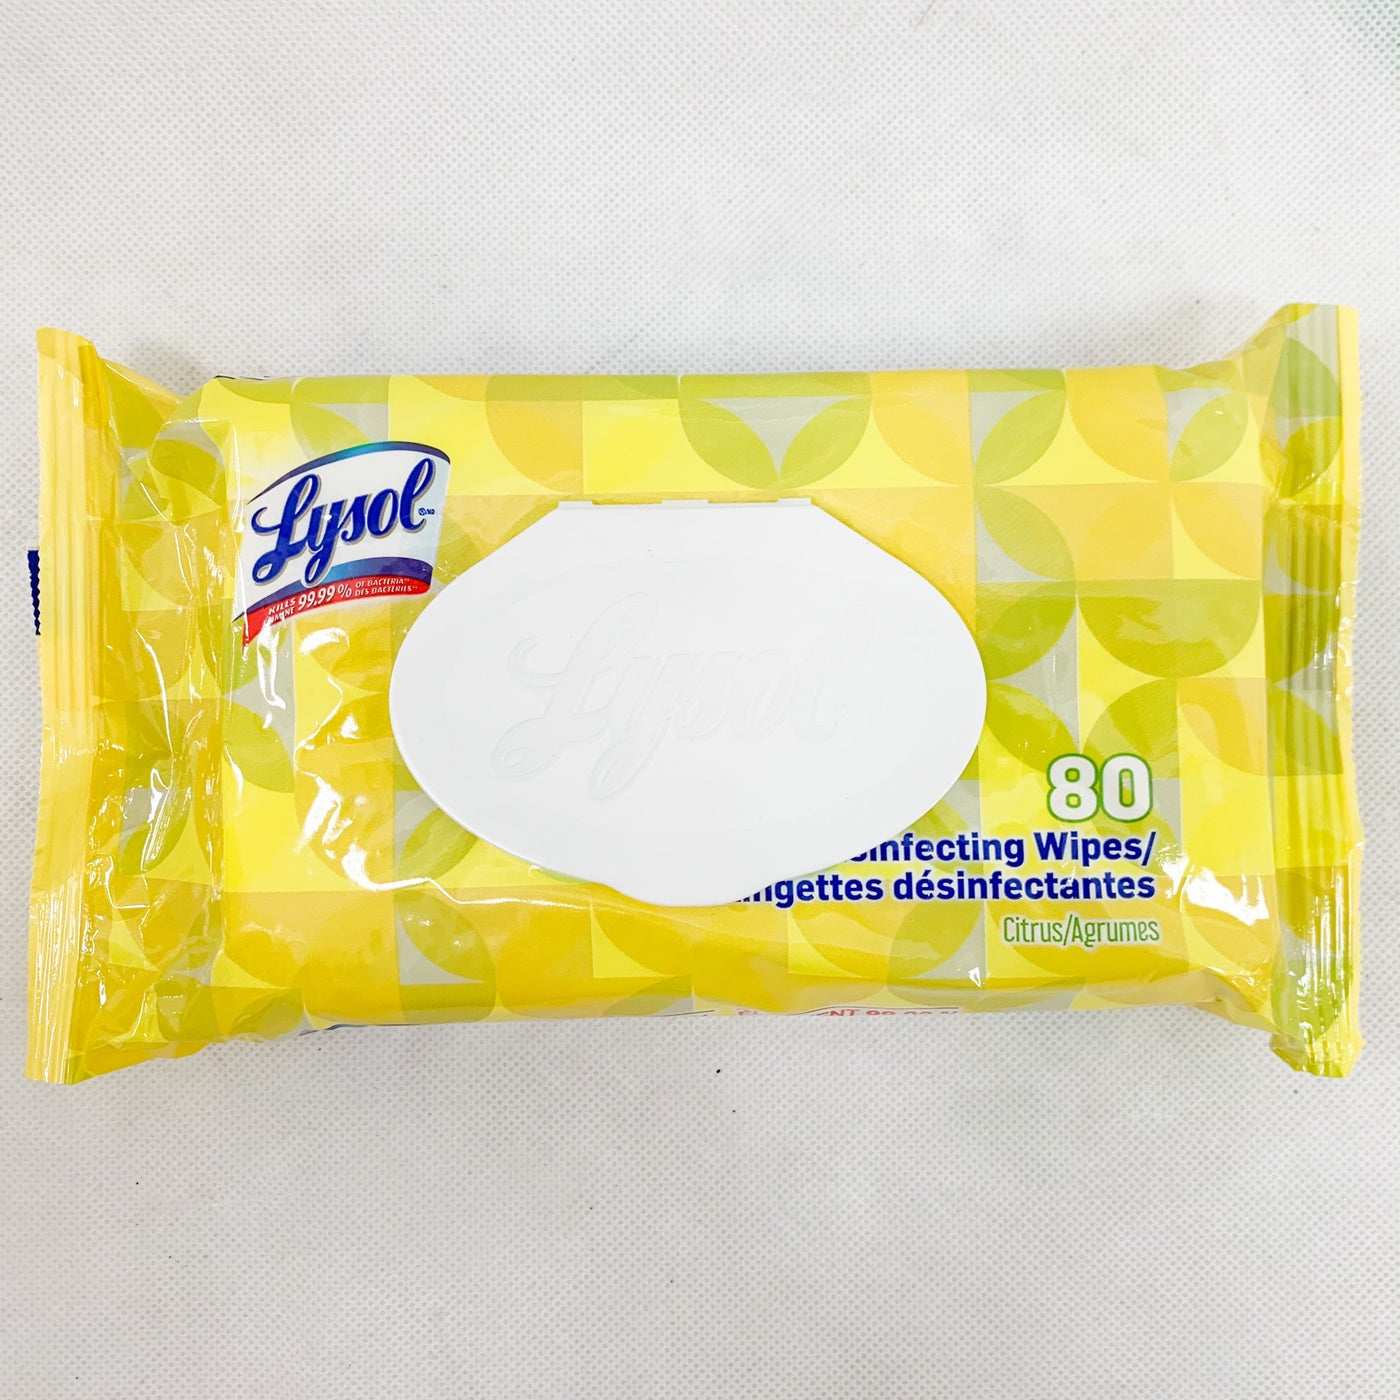 Lysol Disinfecting Wipes 80ct Citrus